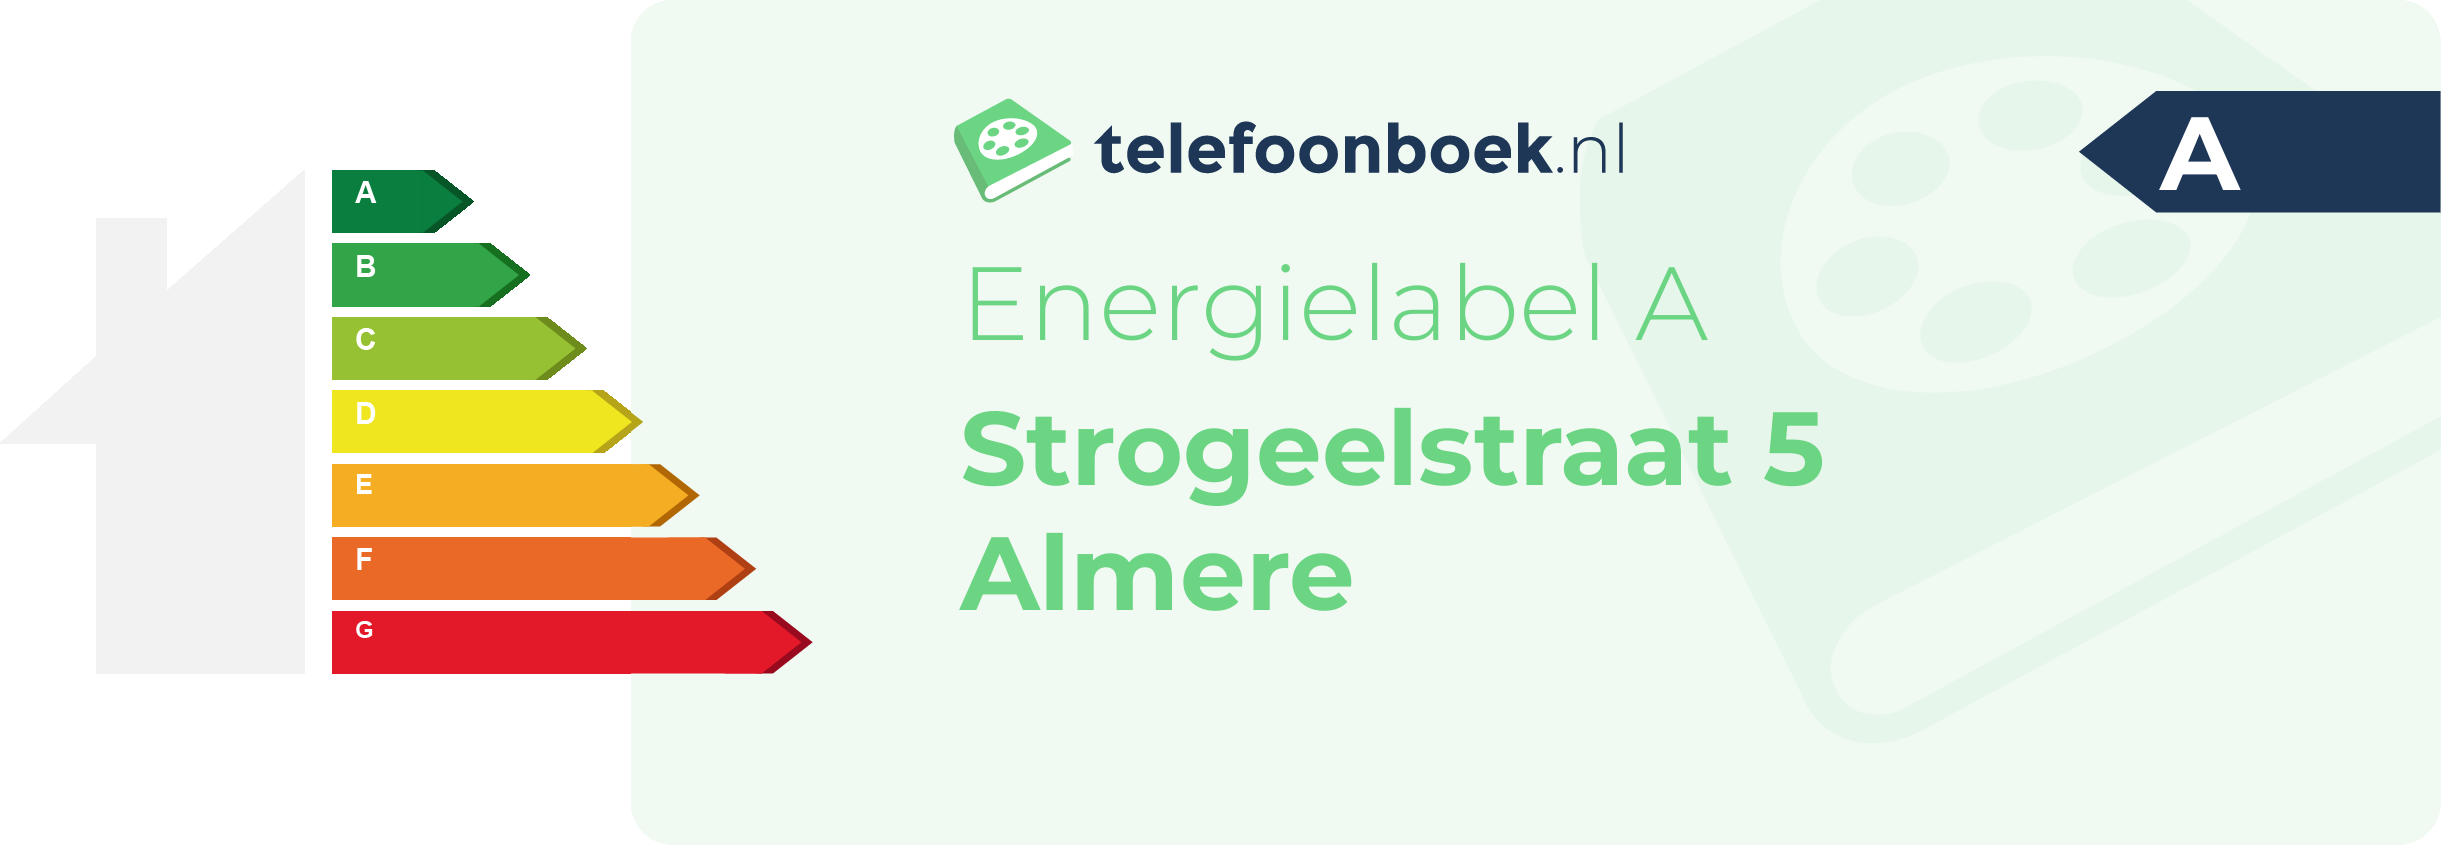 Energielabel Strogeelstraat 5 Almere